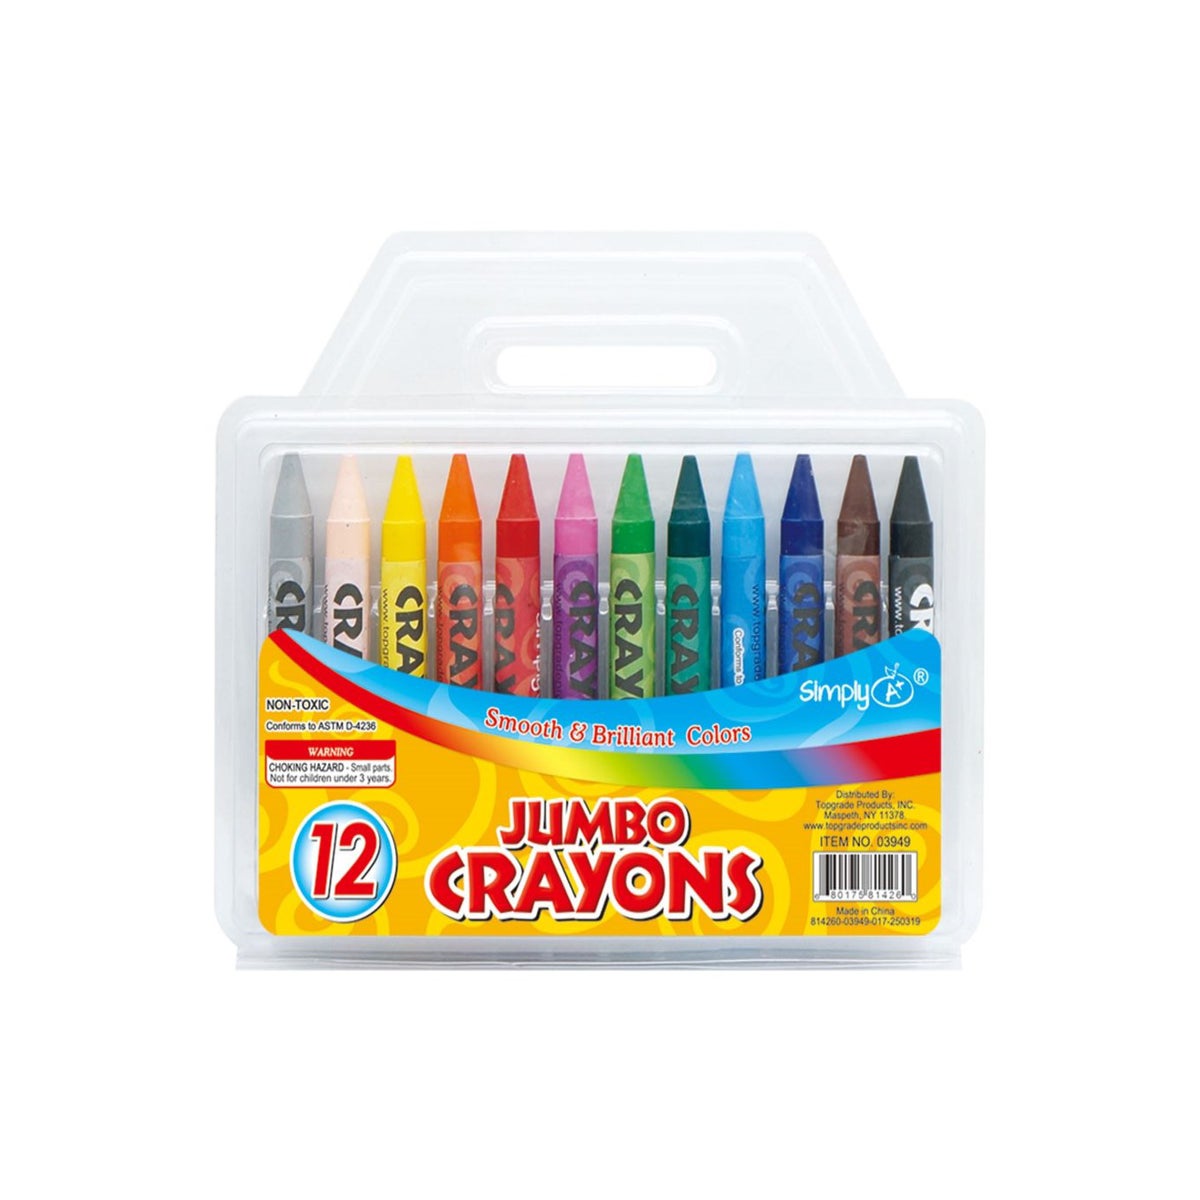 CRAYON: 12 PK, JUMBO #03949 (PK 24/144) - pen, marker, crayon & paints